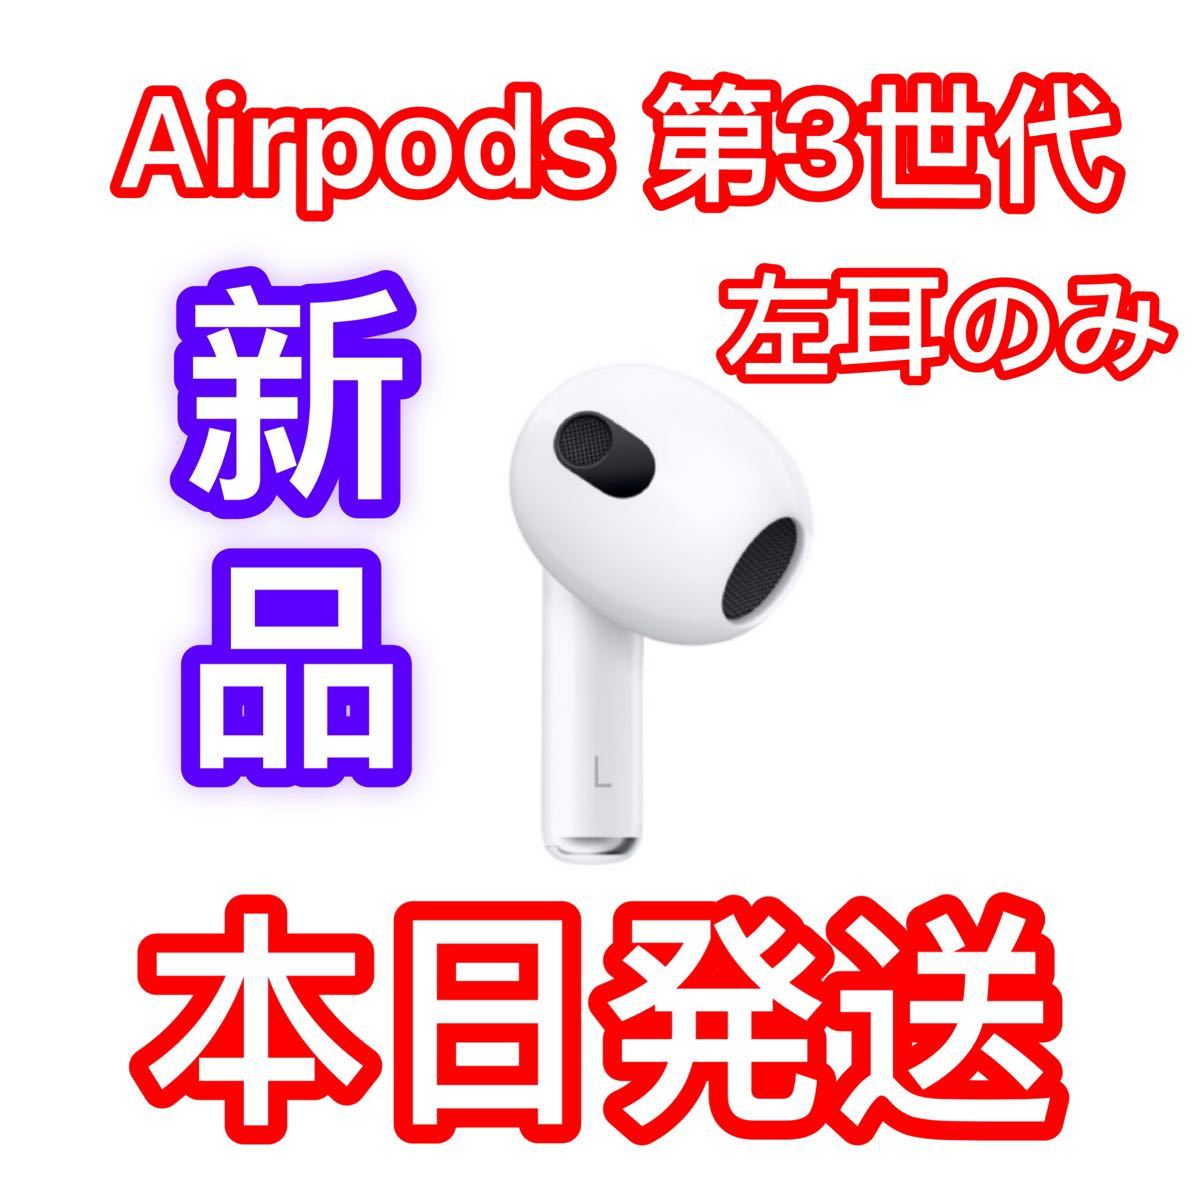 NEW Apple AirPods AirPods第３世代 右耳のみ R片耳 国内純正品 kead.al